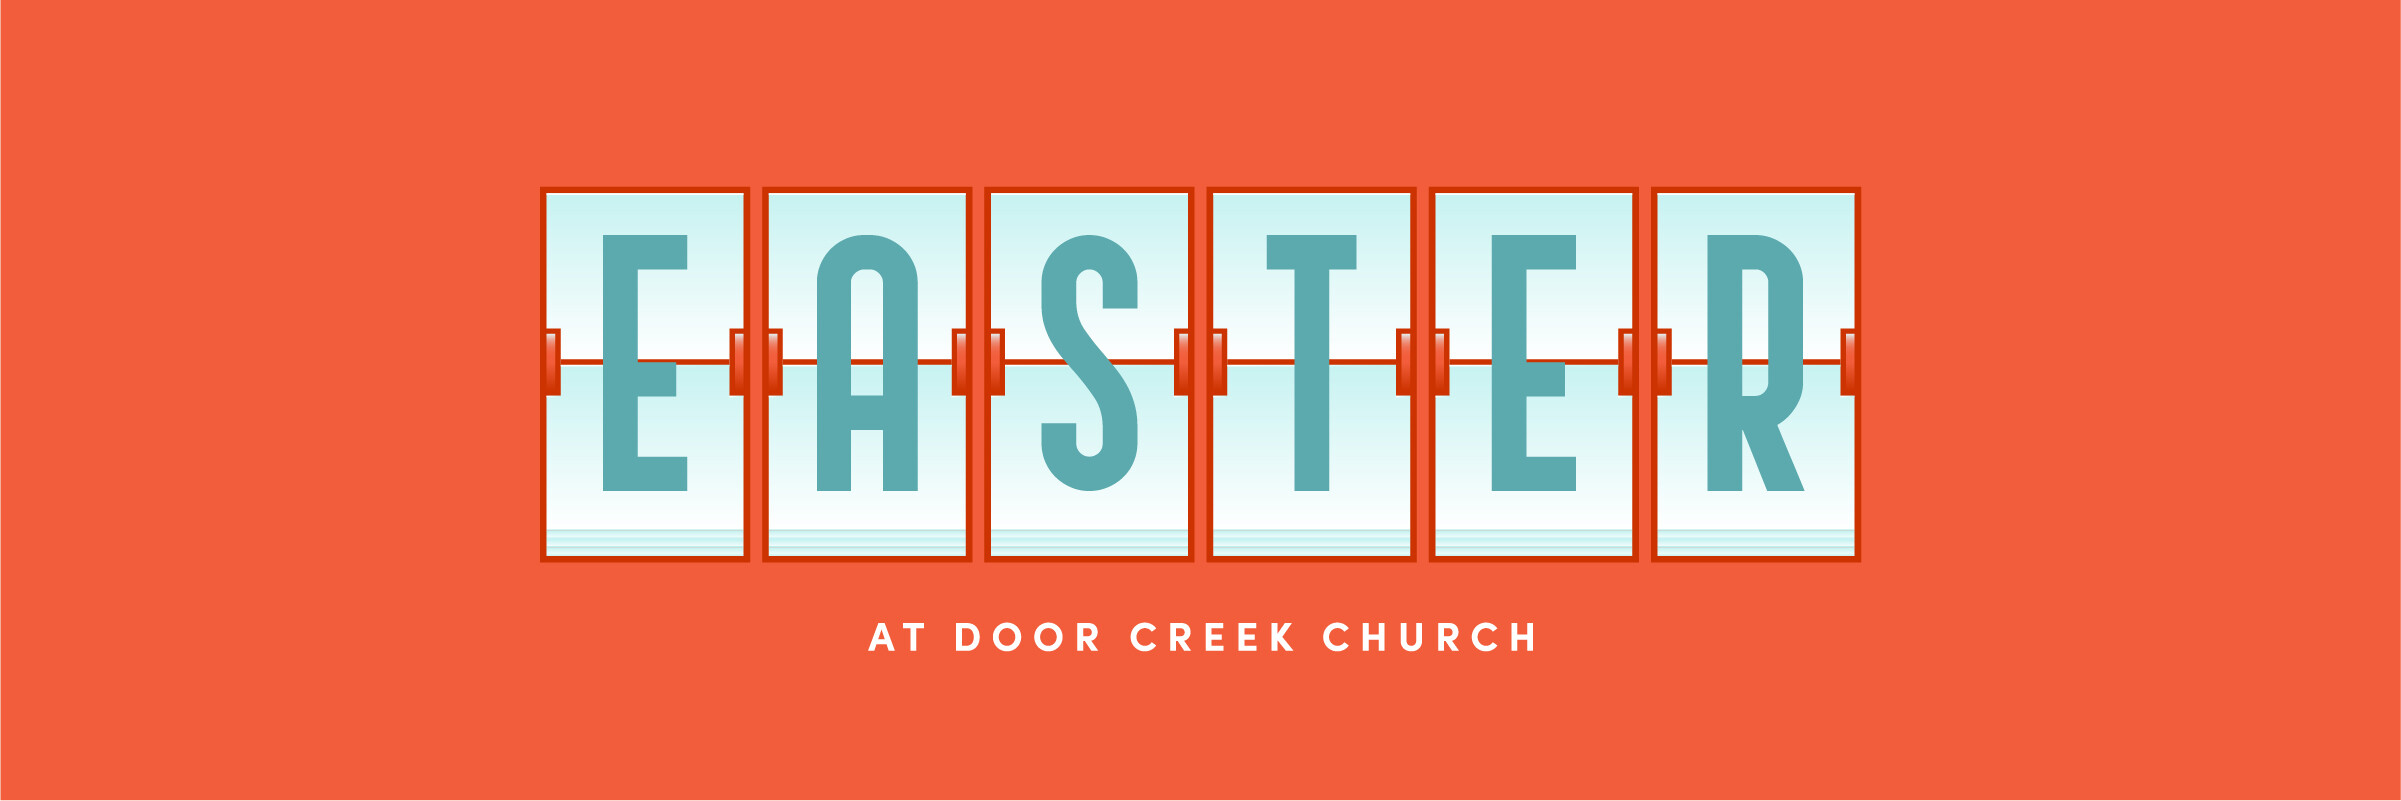 Easter at Door Creek Church